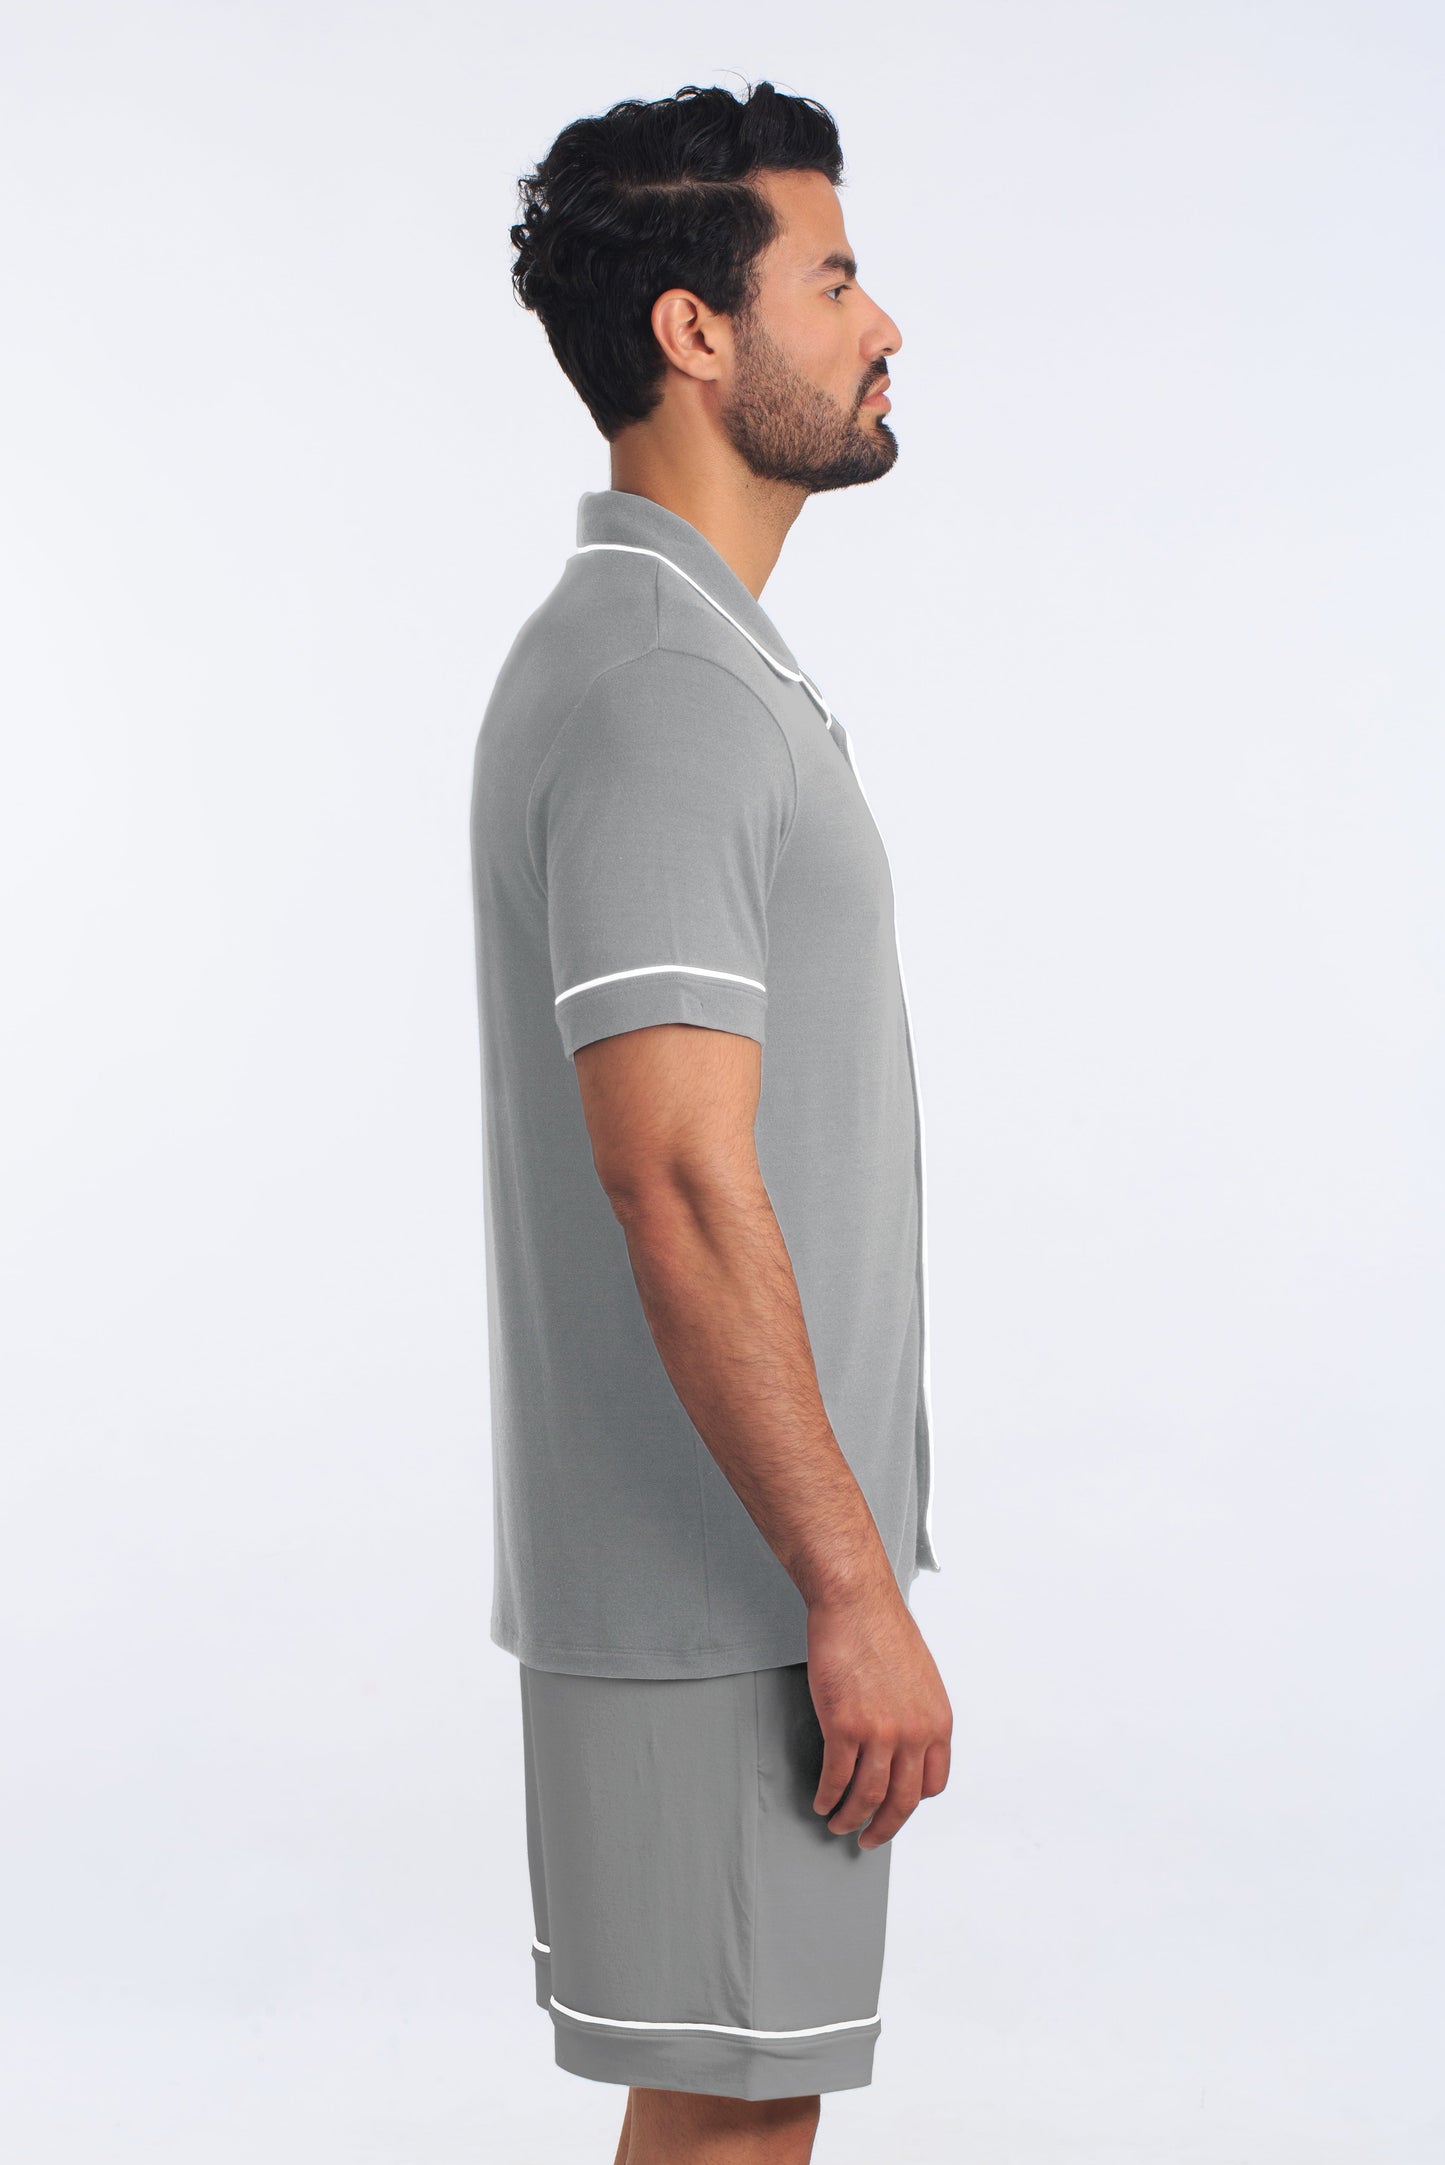 Ultimate Grey PJ Boyfriend Set (Shirt + Short) JBFSH4116 Side